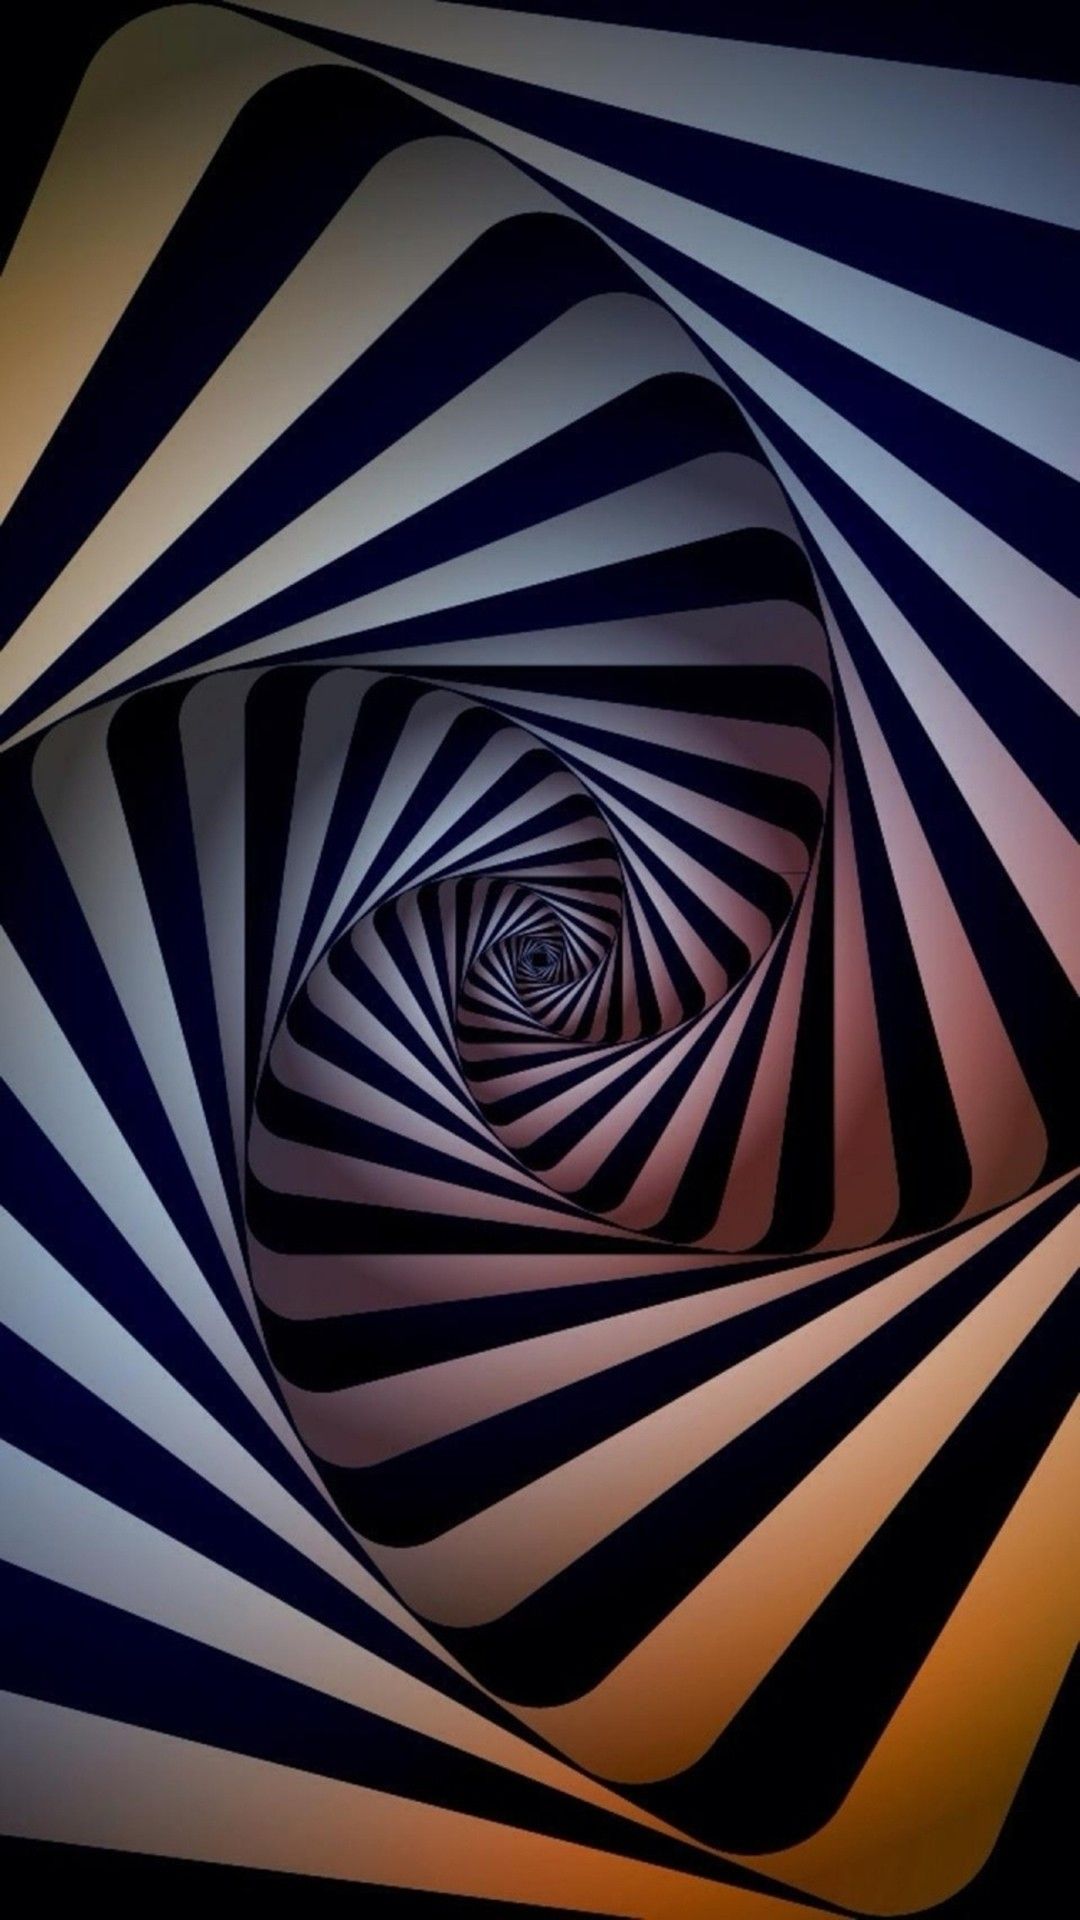 Abstract Swirl Dimensional 3D iPhone 6 Wallpaper Desktop Image